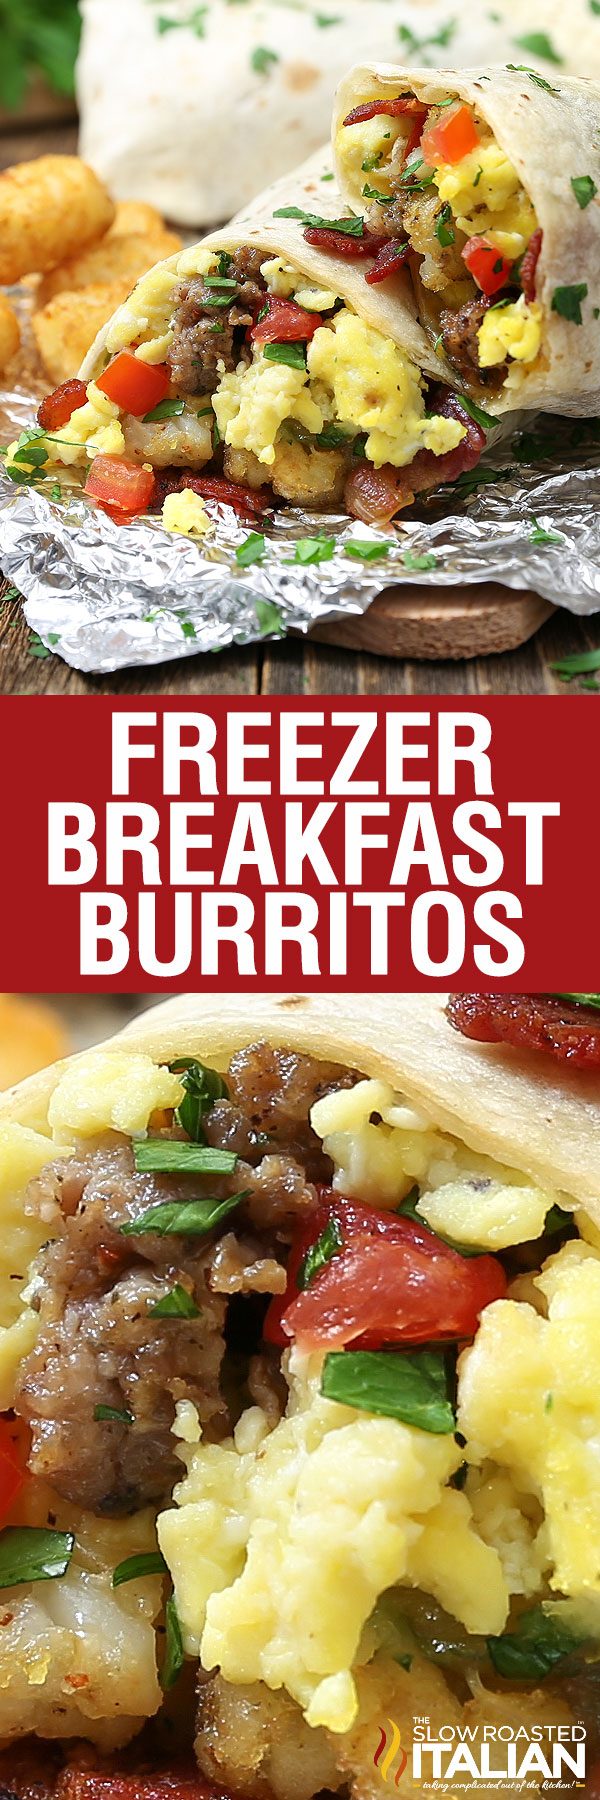 freezer breakfast burritos -pin